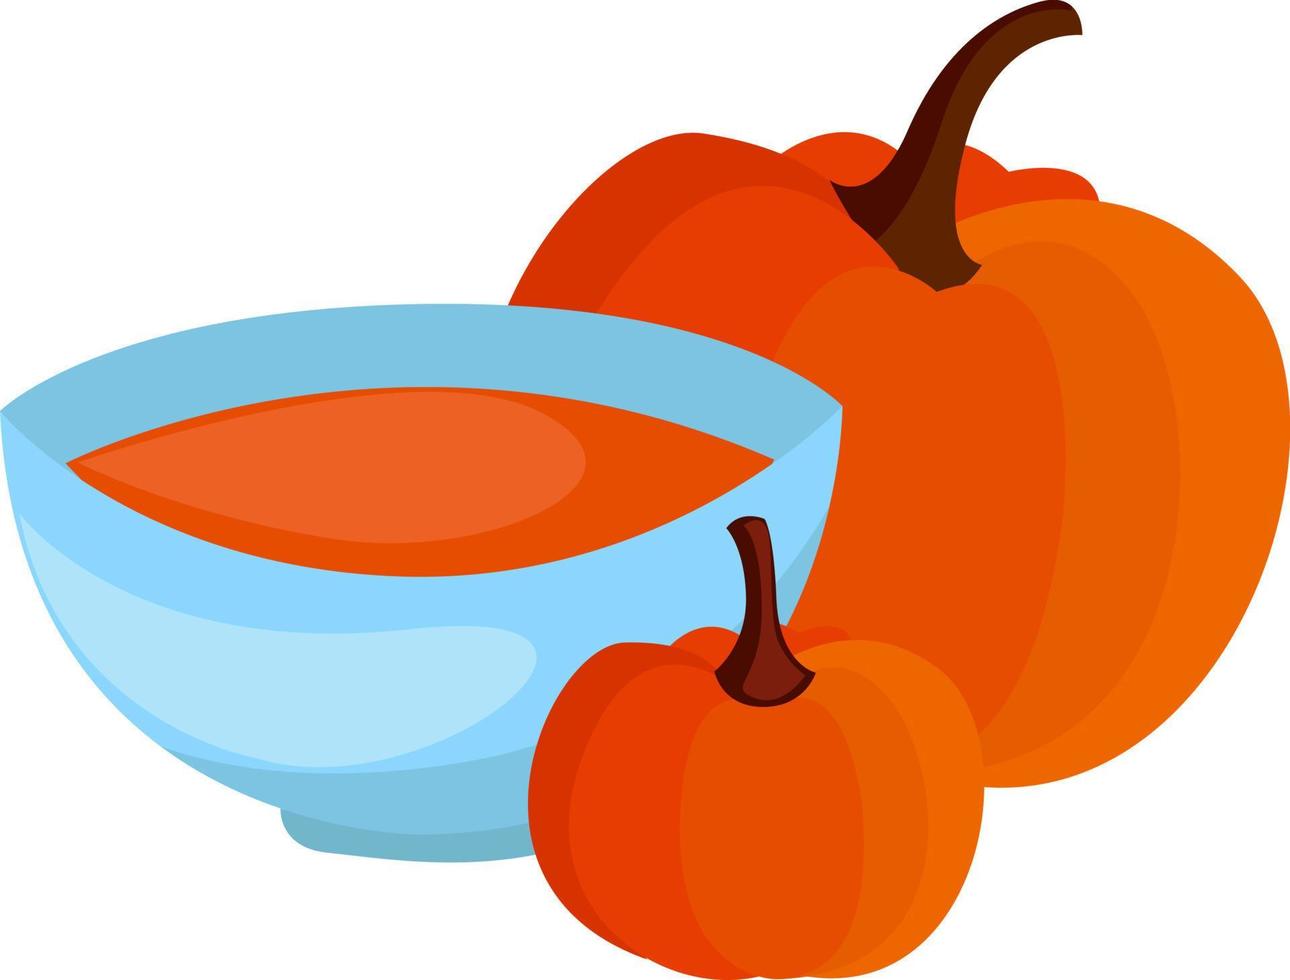 Pumpkin soup, illustration, vector on white background